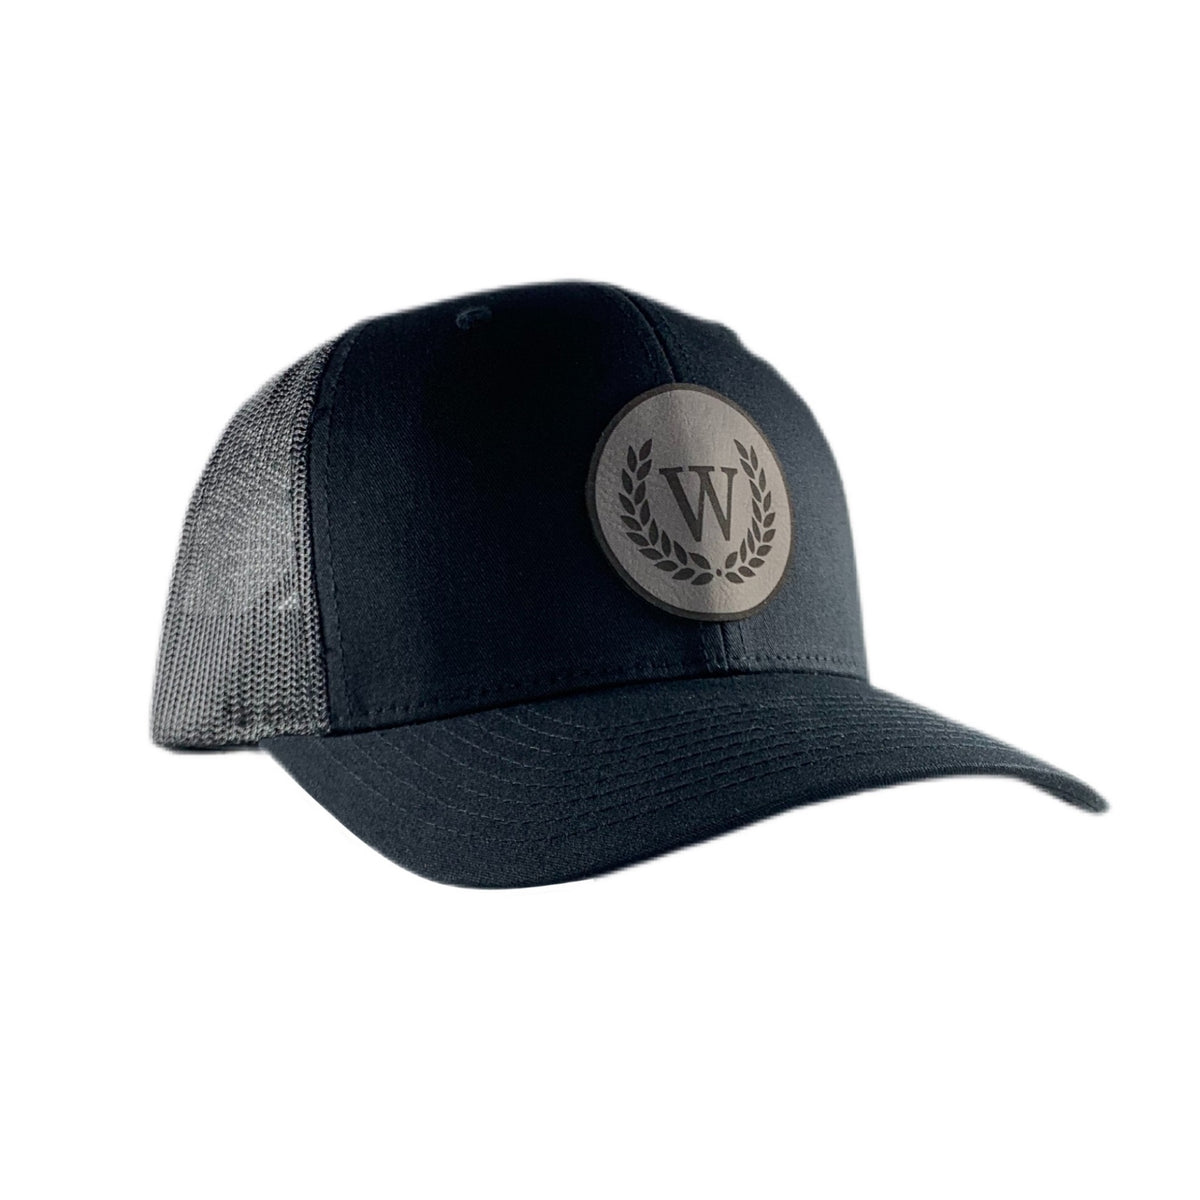 Dark Grey Leather Baseball Cap - Winner Caps MFG. Company